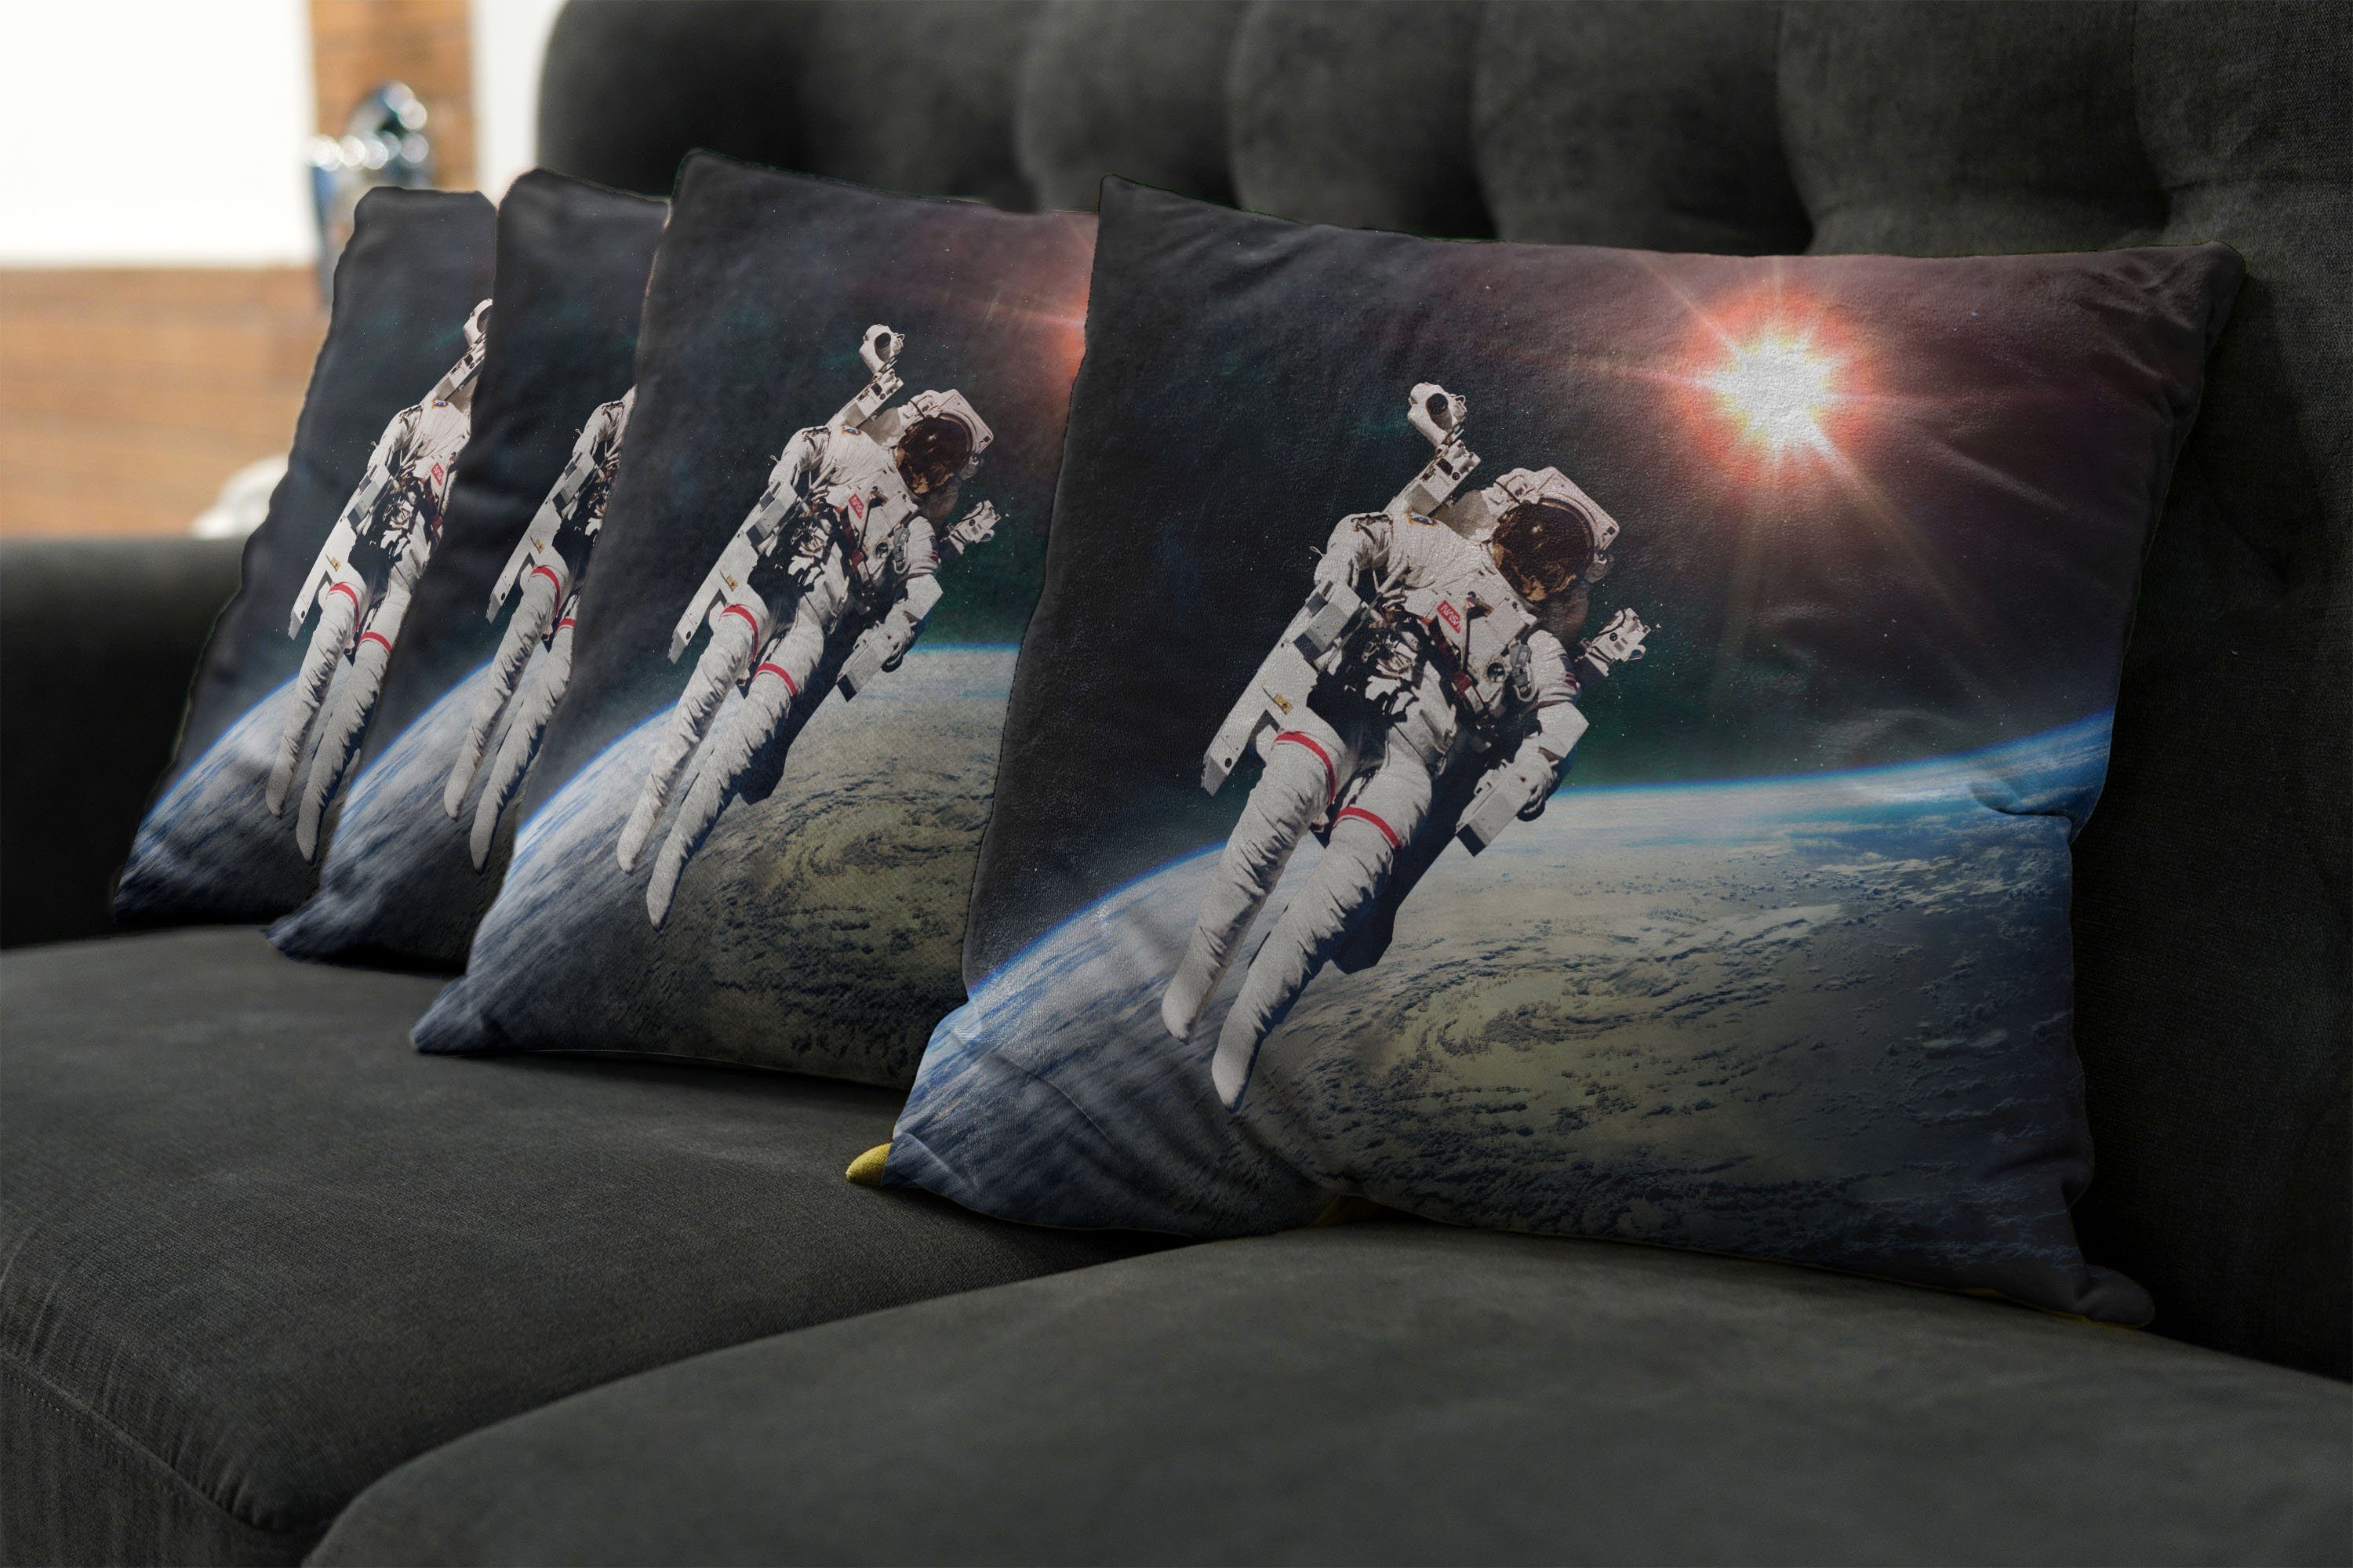 Astronaut Doppelseitiger Modern Beams (4 Sun Digitaldruck, Kissenbezüge mit Abakuhaus Galaxis Accent Stück),